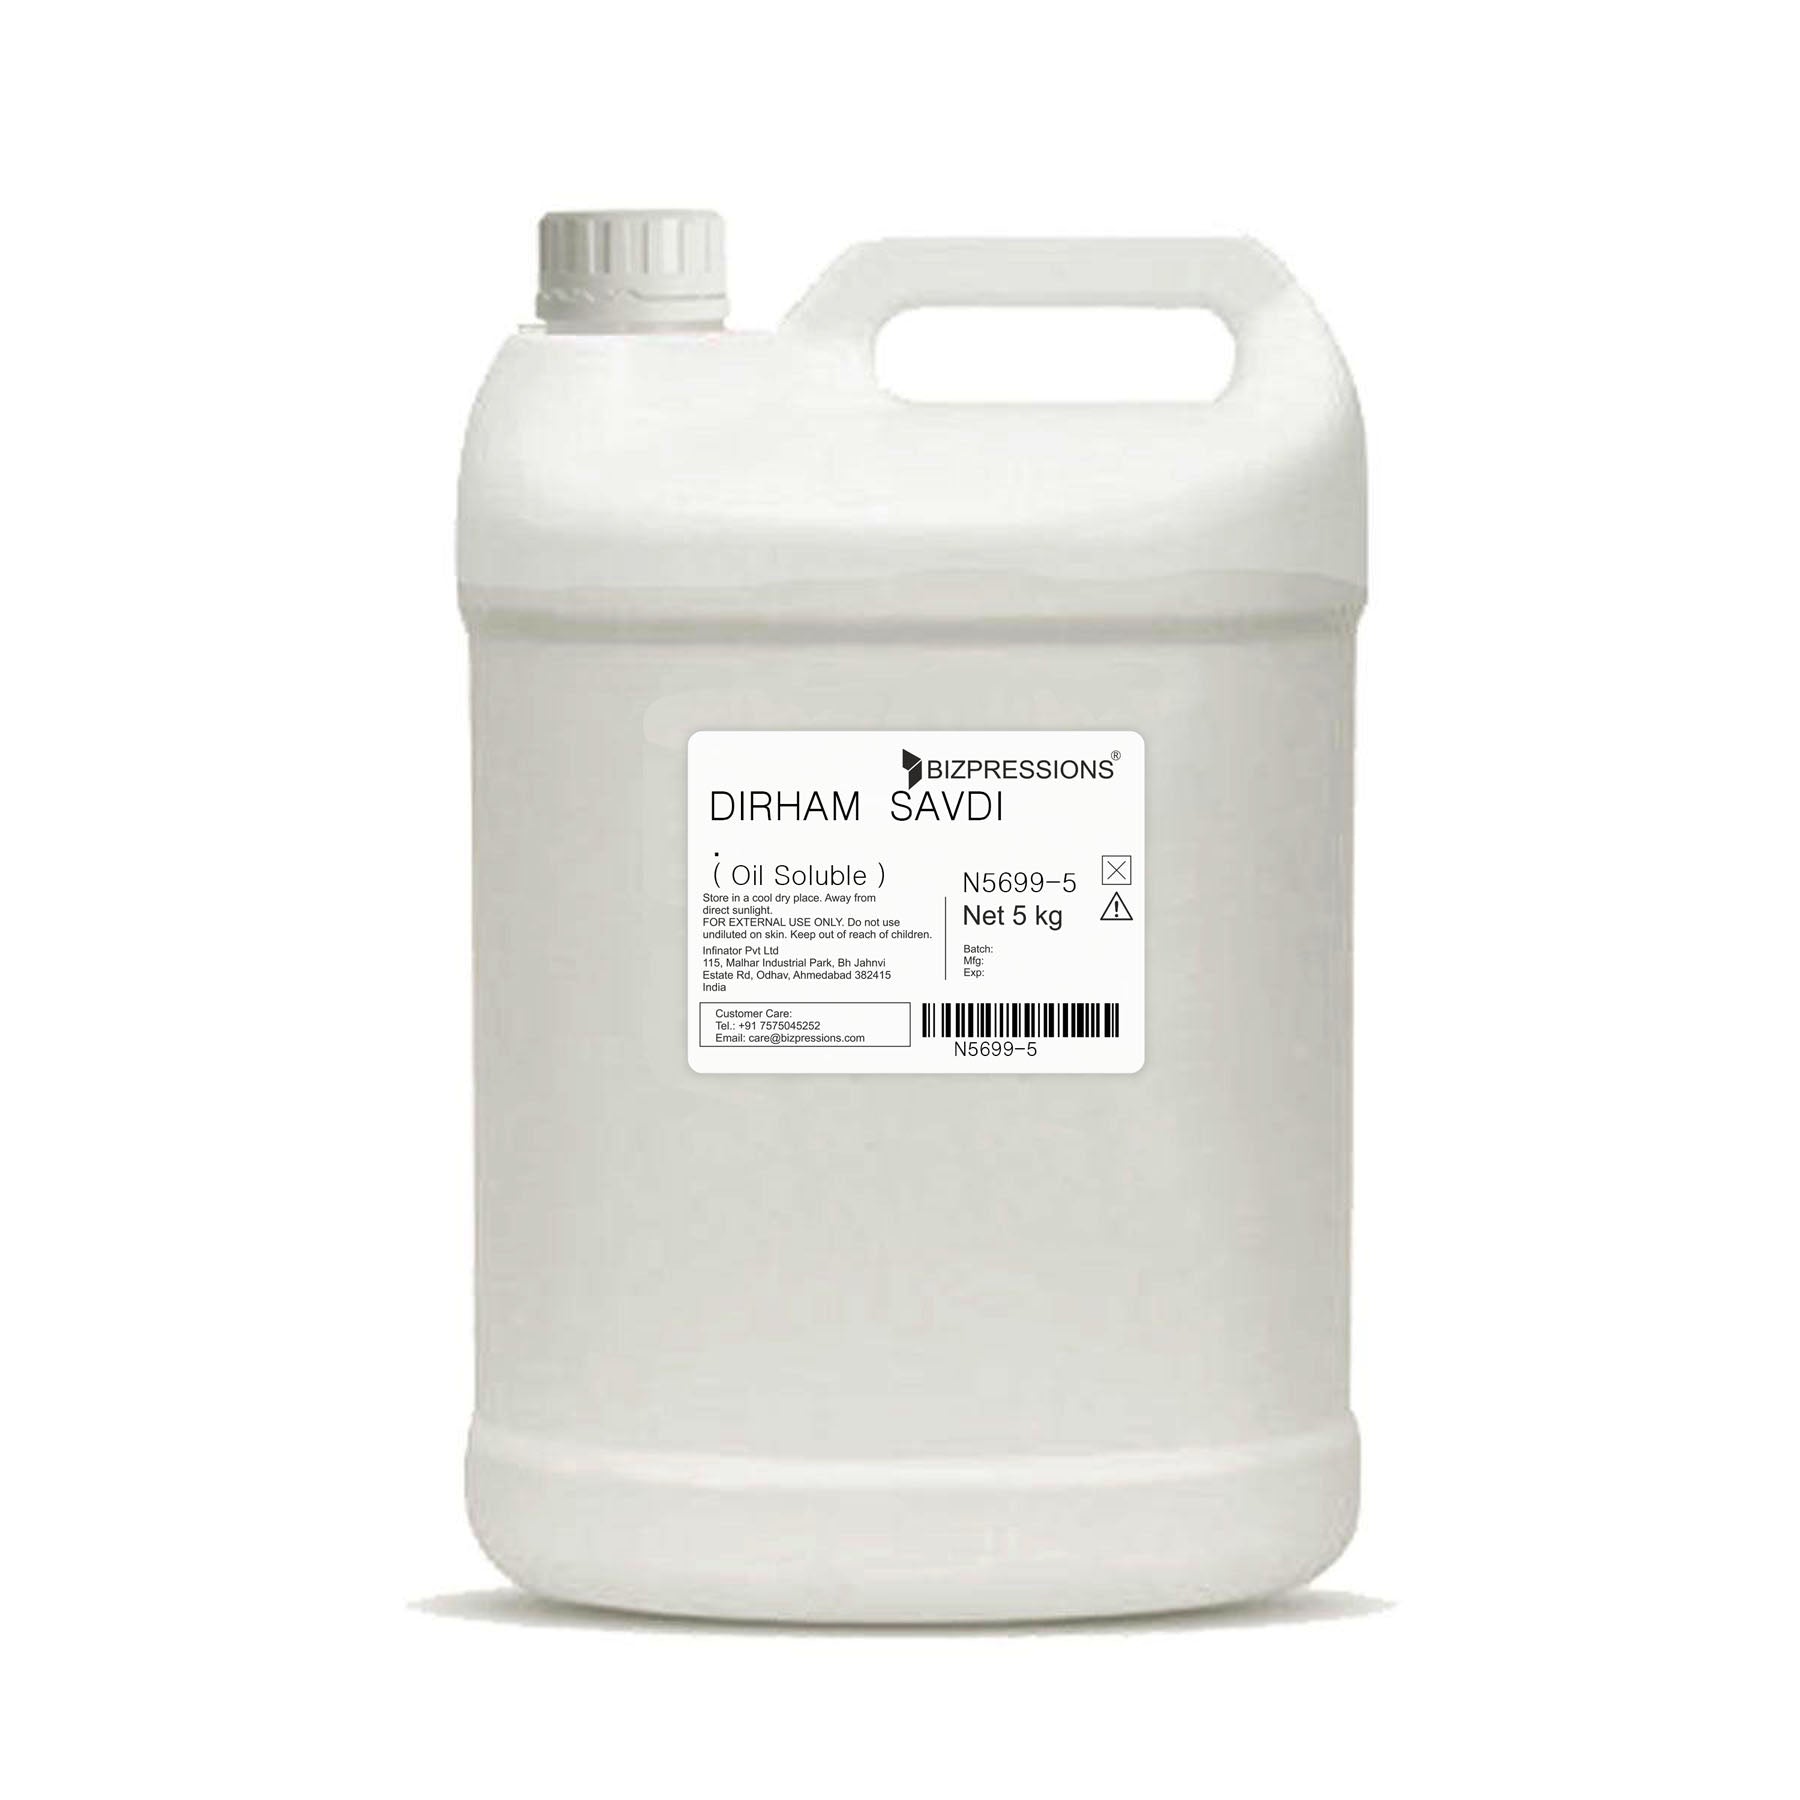 DIRHAM SAVDI - Fragrance ( Oil Soluble ) - 5 kg